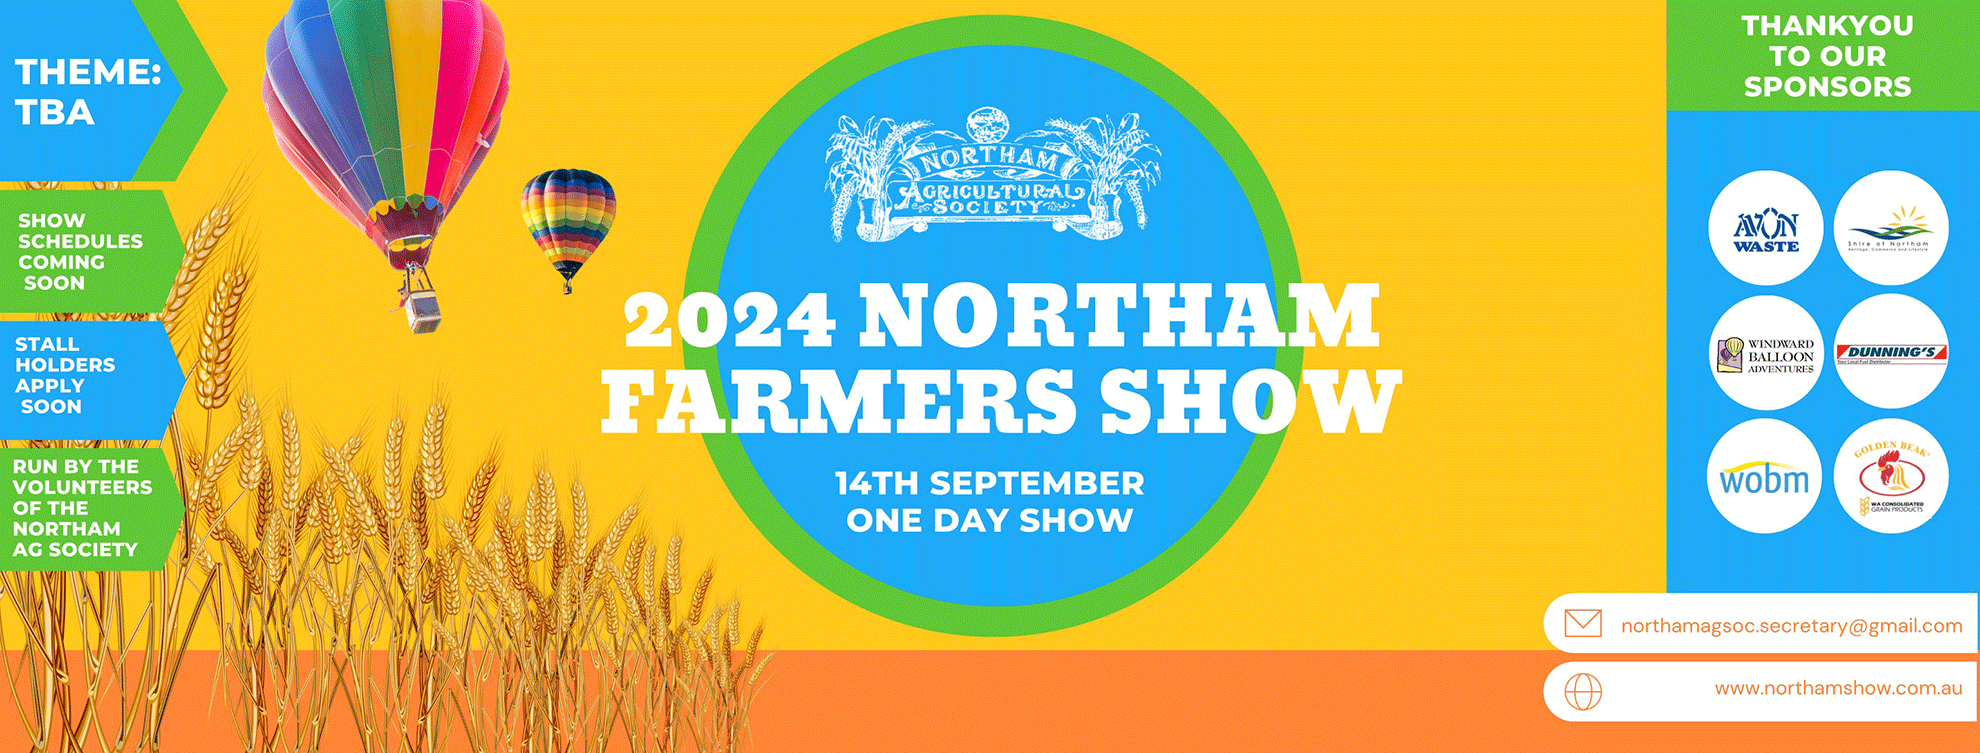 Northam Show 2024 - 14th September 2024